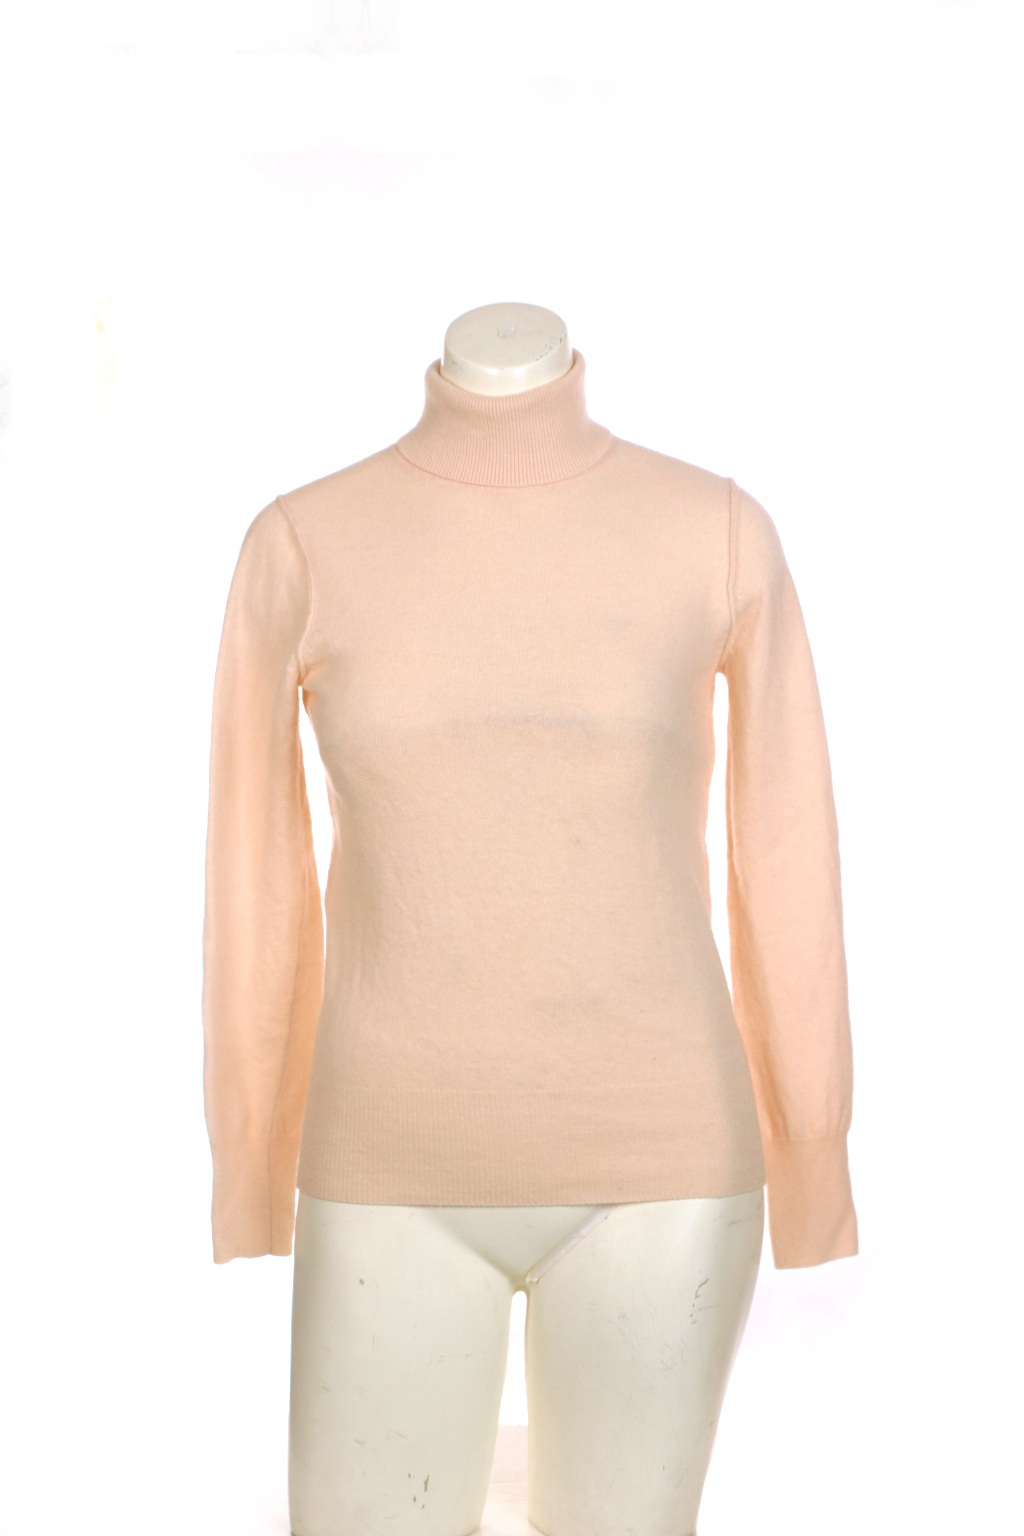 Thrift Shop Sweater Second Hand JCrew Pink Turtleneck Womens M Wool Cashmere